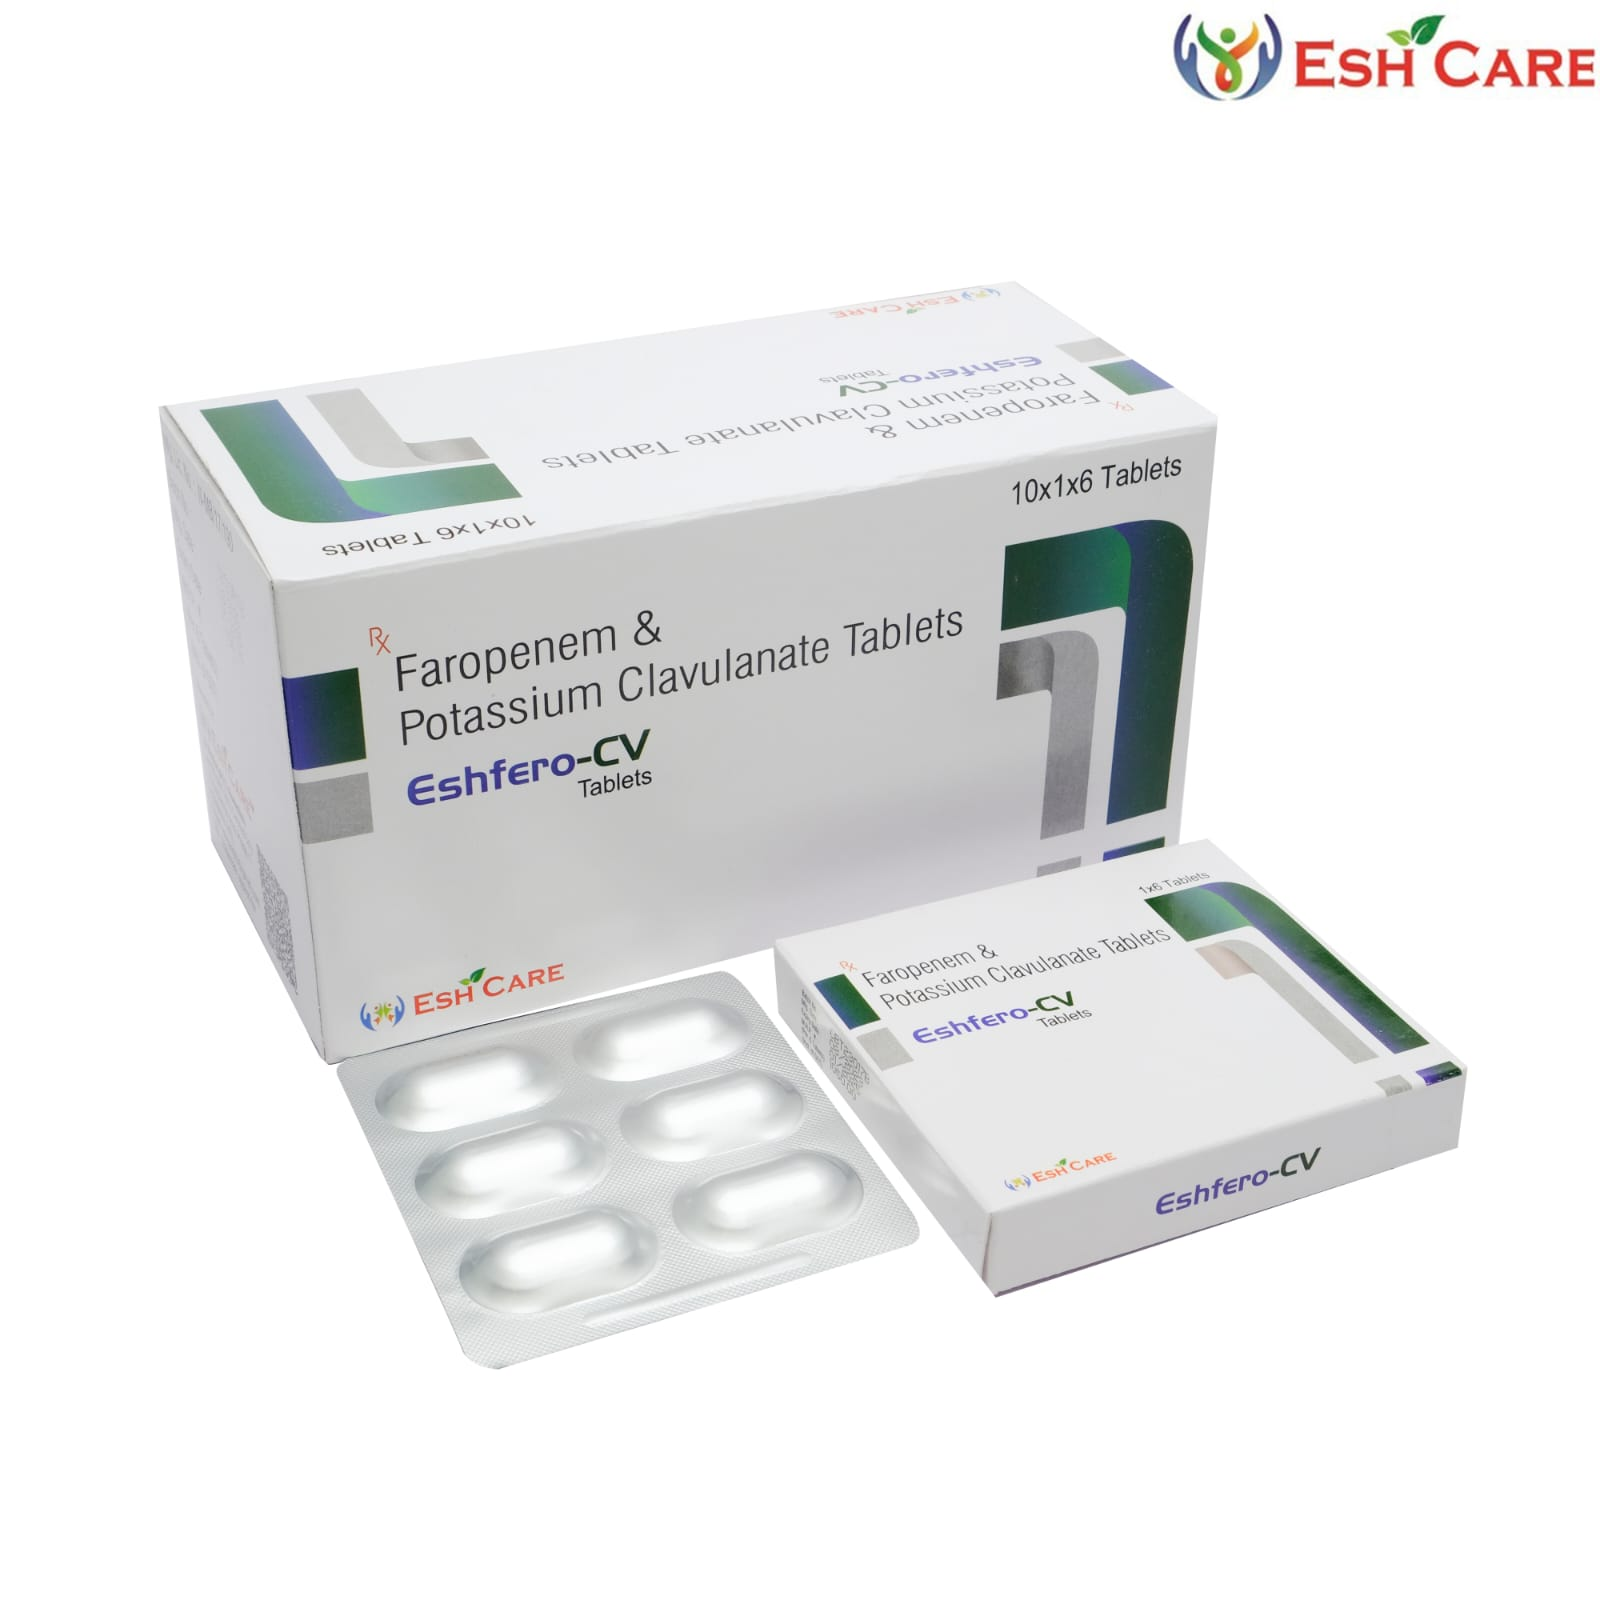 faropenem and potassium clavulanate tablets